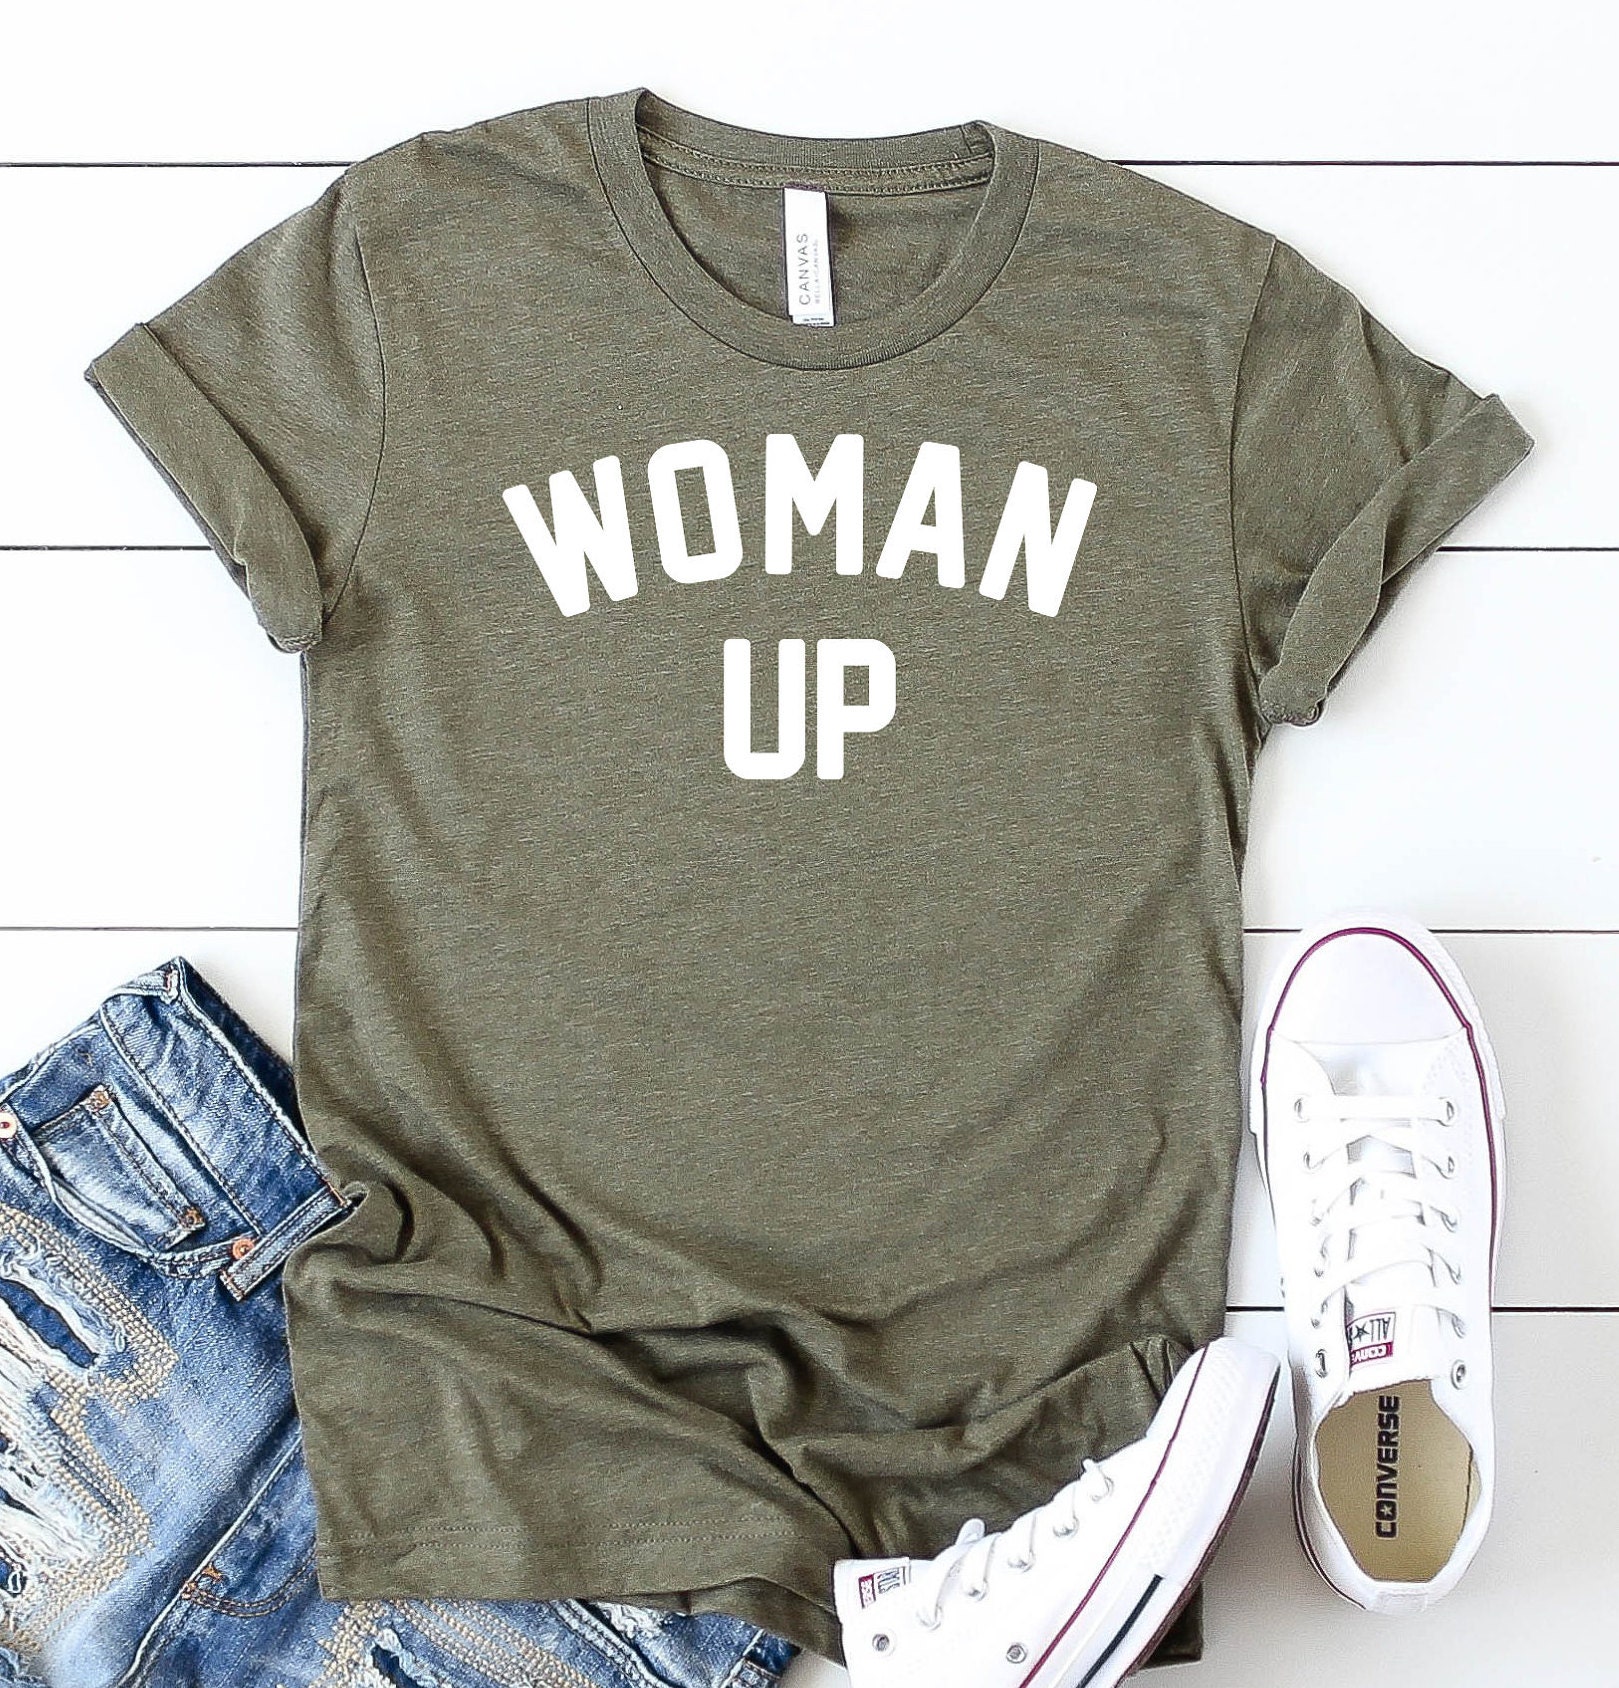 Discover Woman Up T-shirt Feminist Woman Up Shirt Strong Woman Shirt Girl Power Shirt International Womens Day Month Gift Tee Shirt Sweatshirt Tote